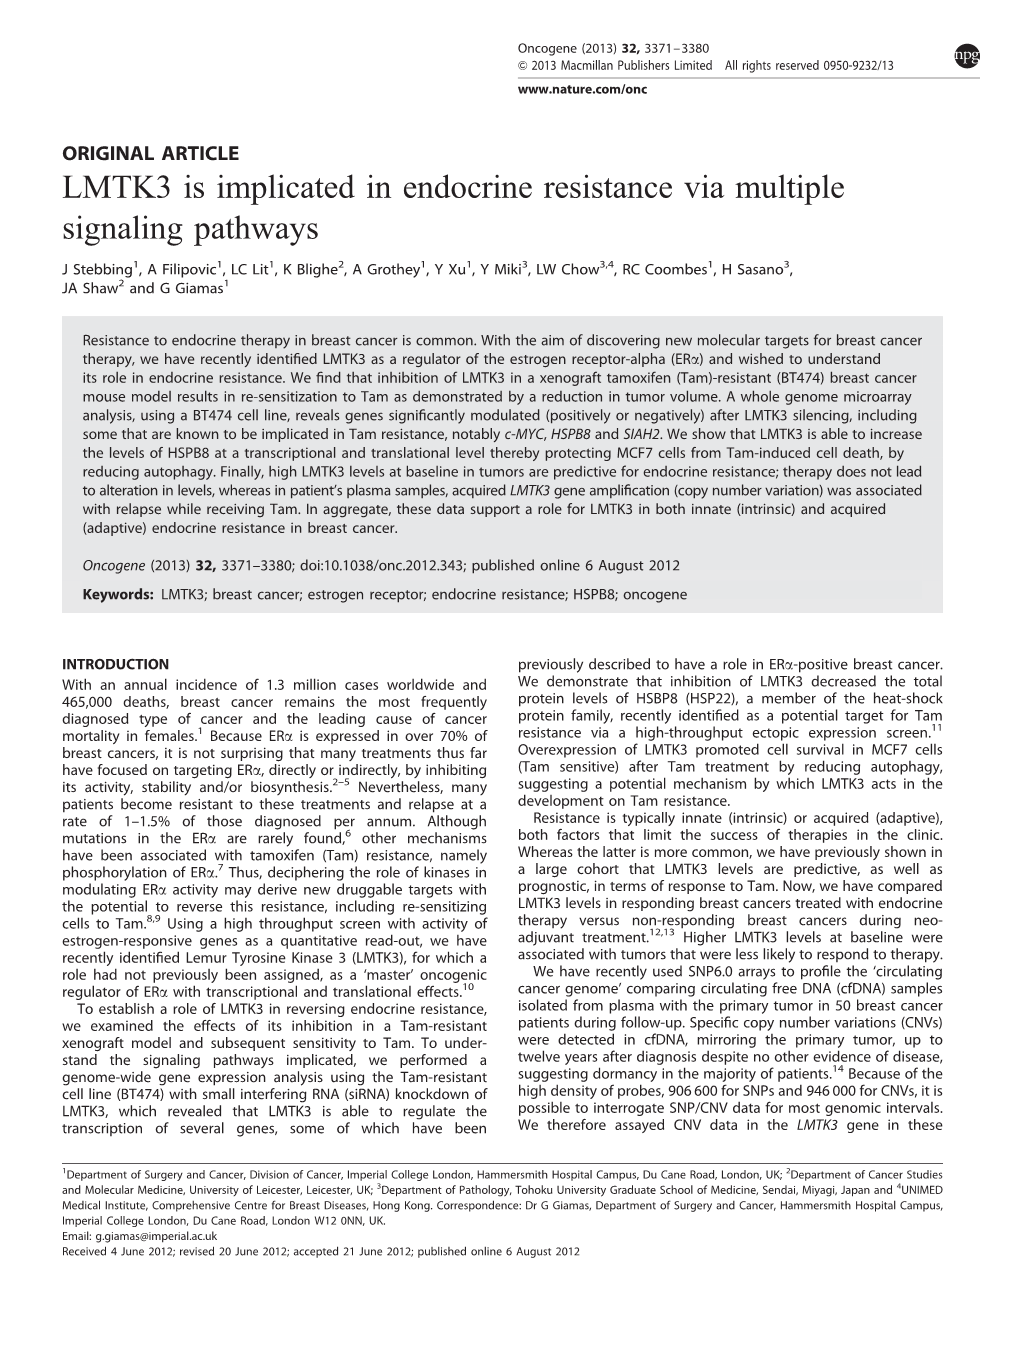 LMTK3 Is Implicated in Endocrine Resistance Via Multiple Signaling Pathways